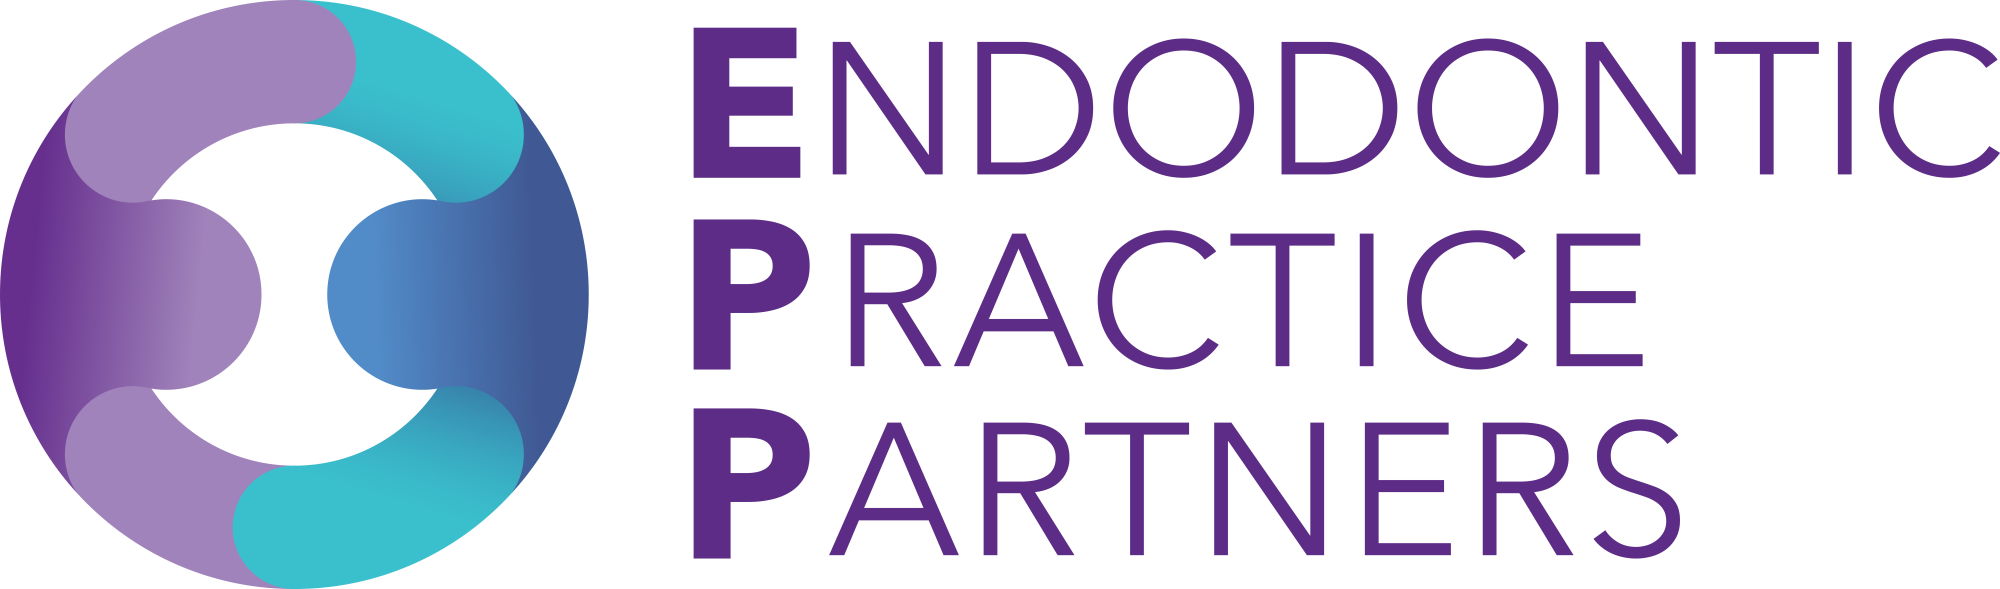 Endodontic Practice Partners